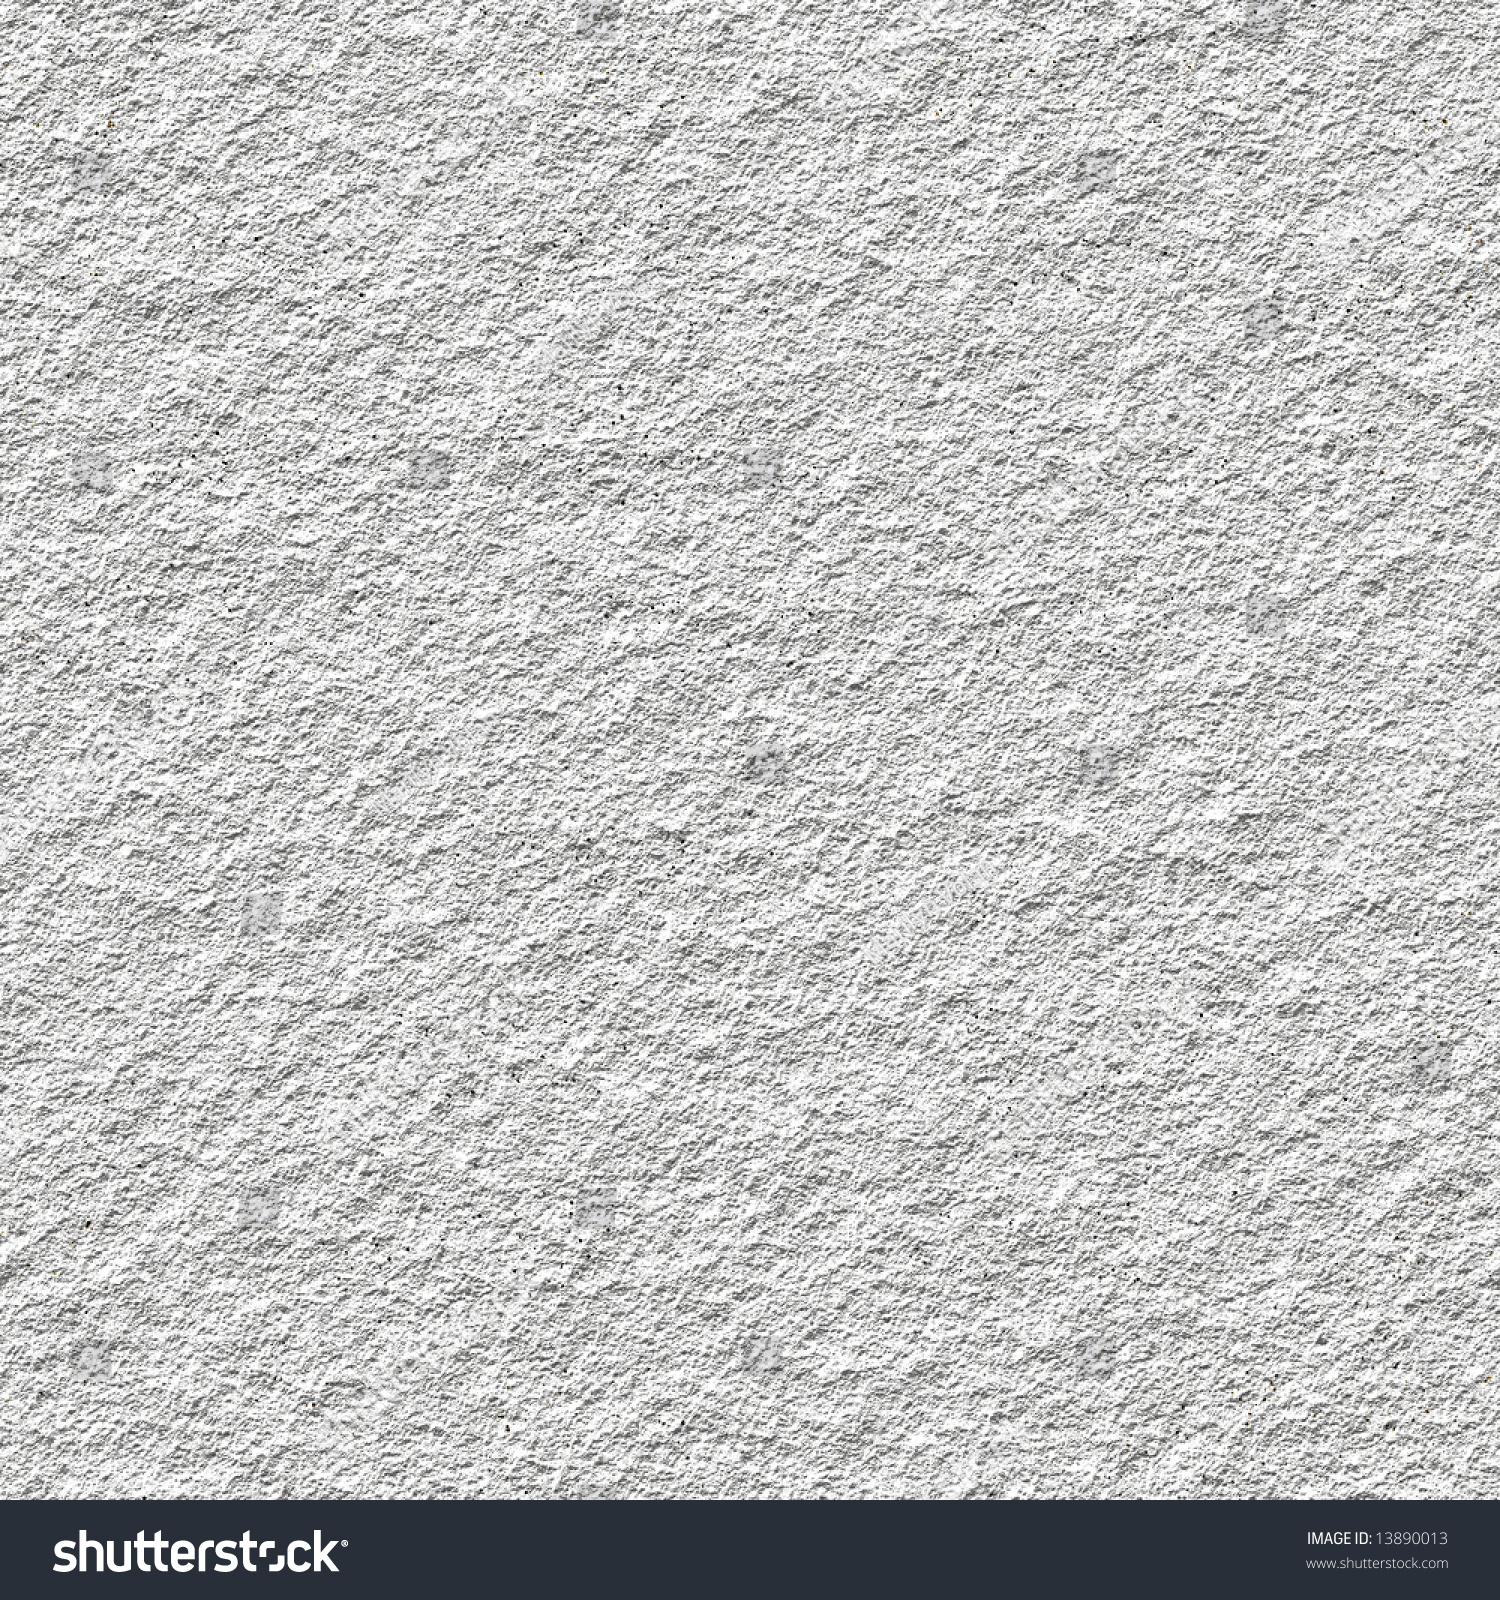 Concrete Texture Seamless Background Stock Illustration 13890013 ...